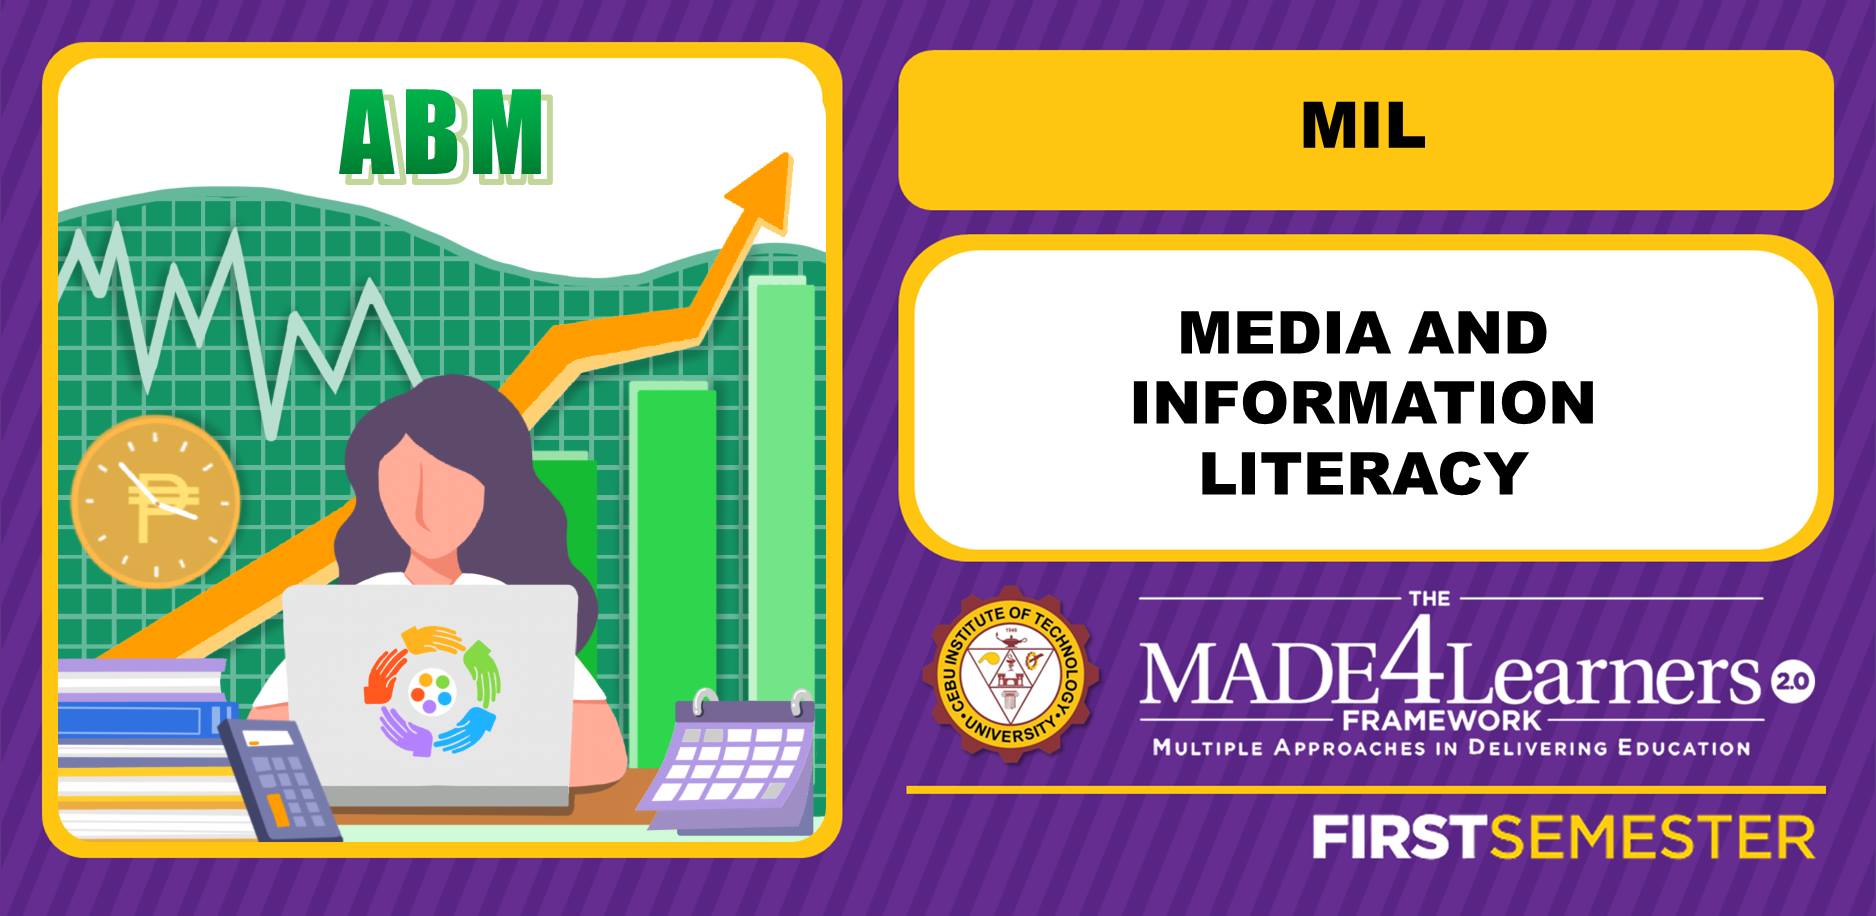 MIL: Media Information Literacy